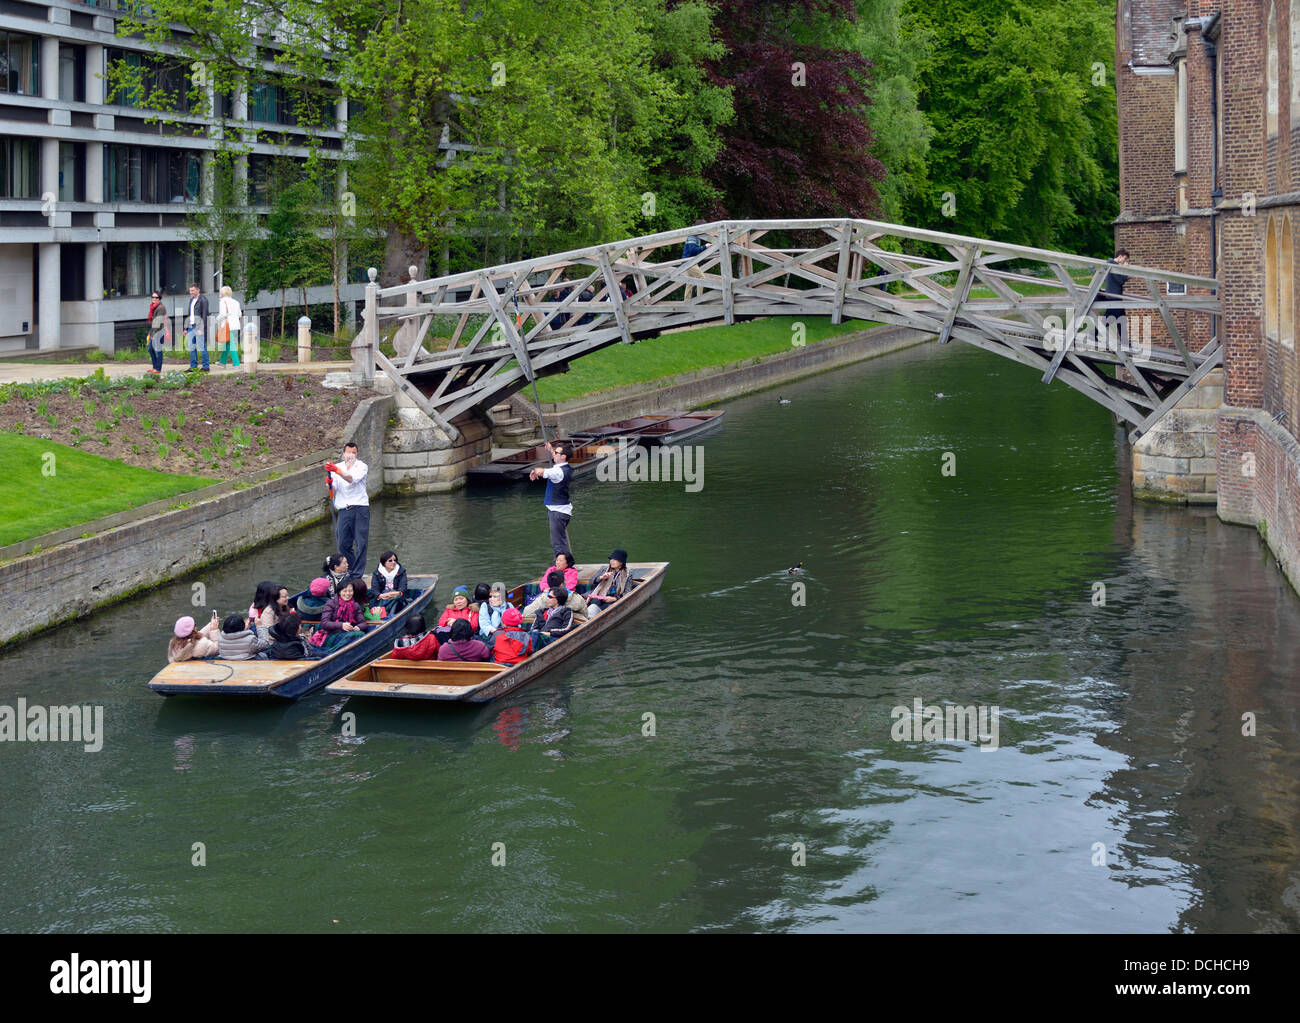 Mathematical Bridge and tourists in punts on River Cam. Cambridge. Cambridgeshire, England, United Kingdom, Europe. Stock Photo